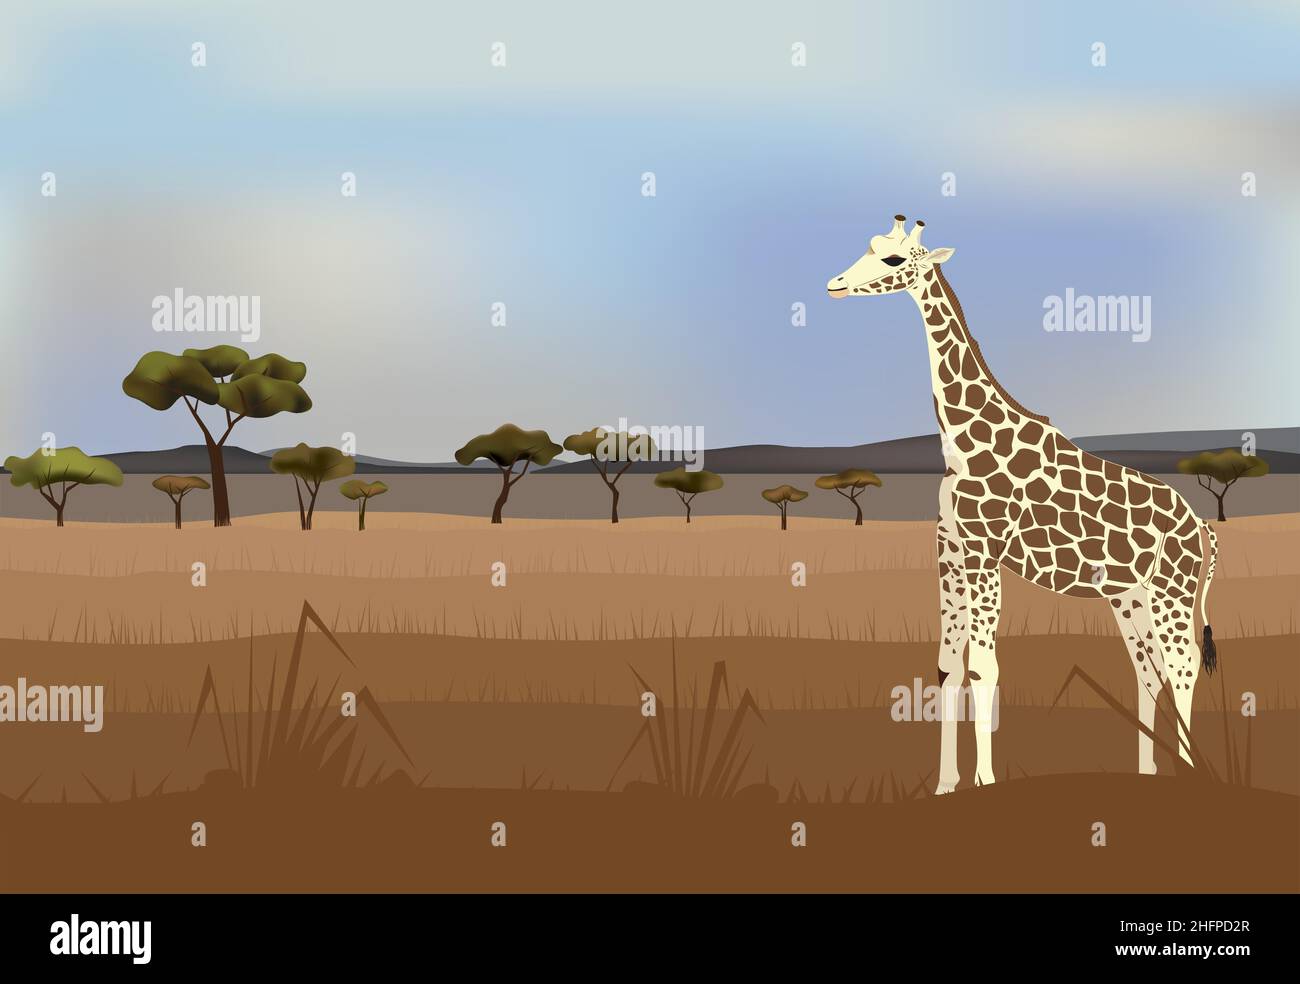 Giraffe in Grasslands A giraffe in savanna vector image Stock Vector